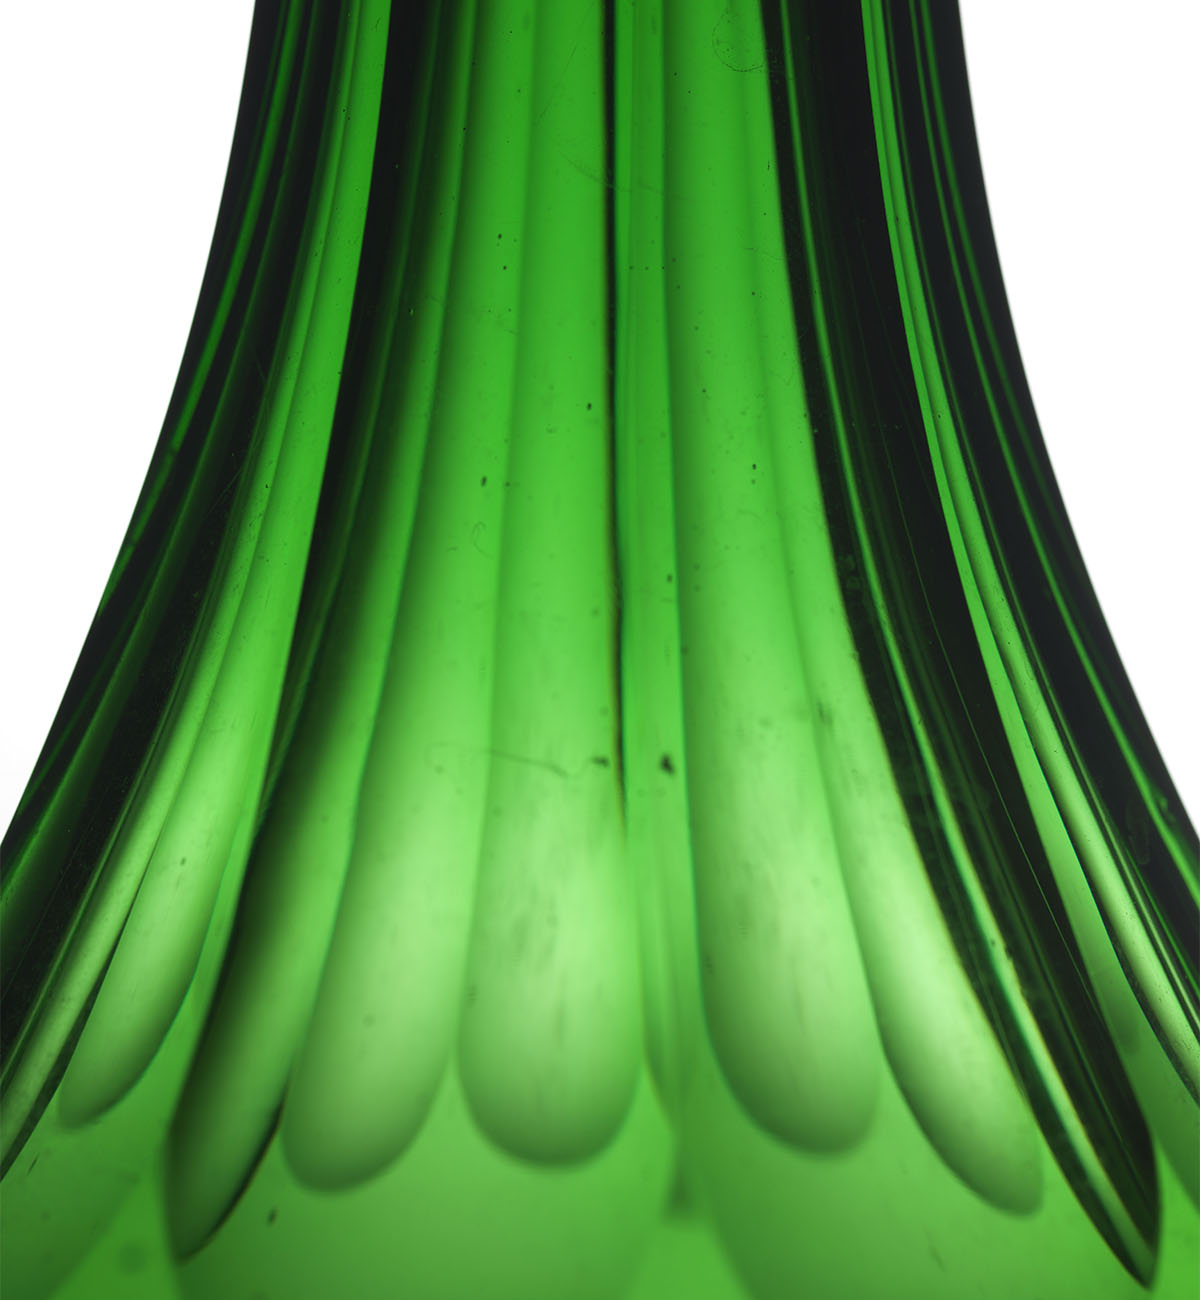 Green glass decanter